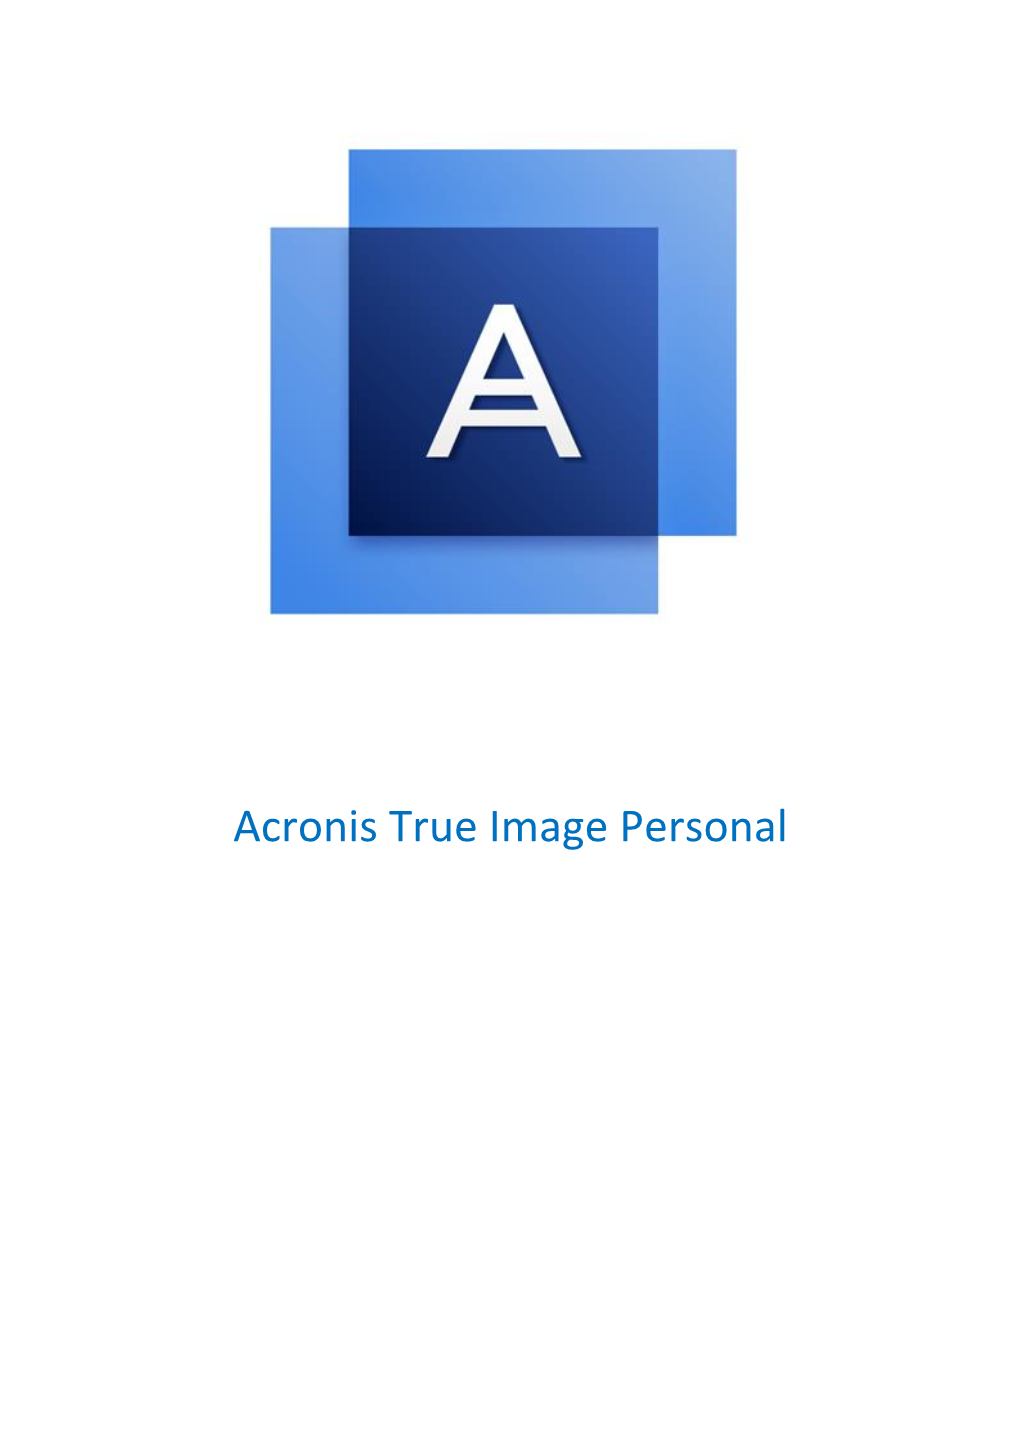 Acronis True Image Personal